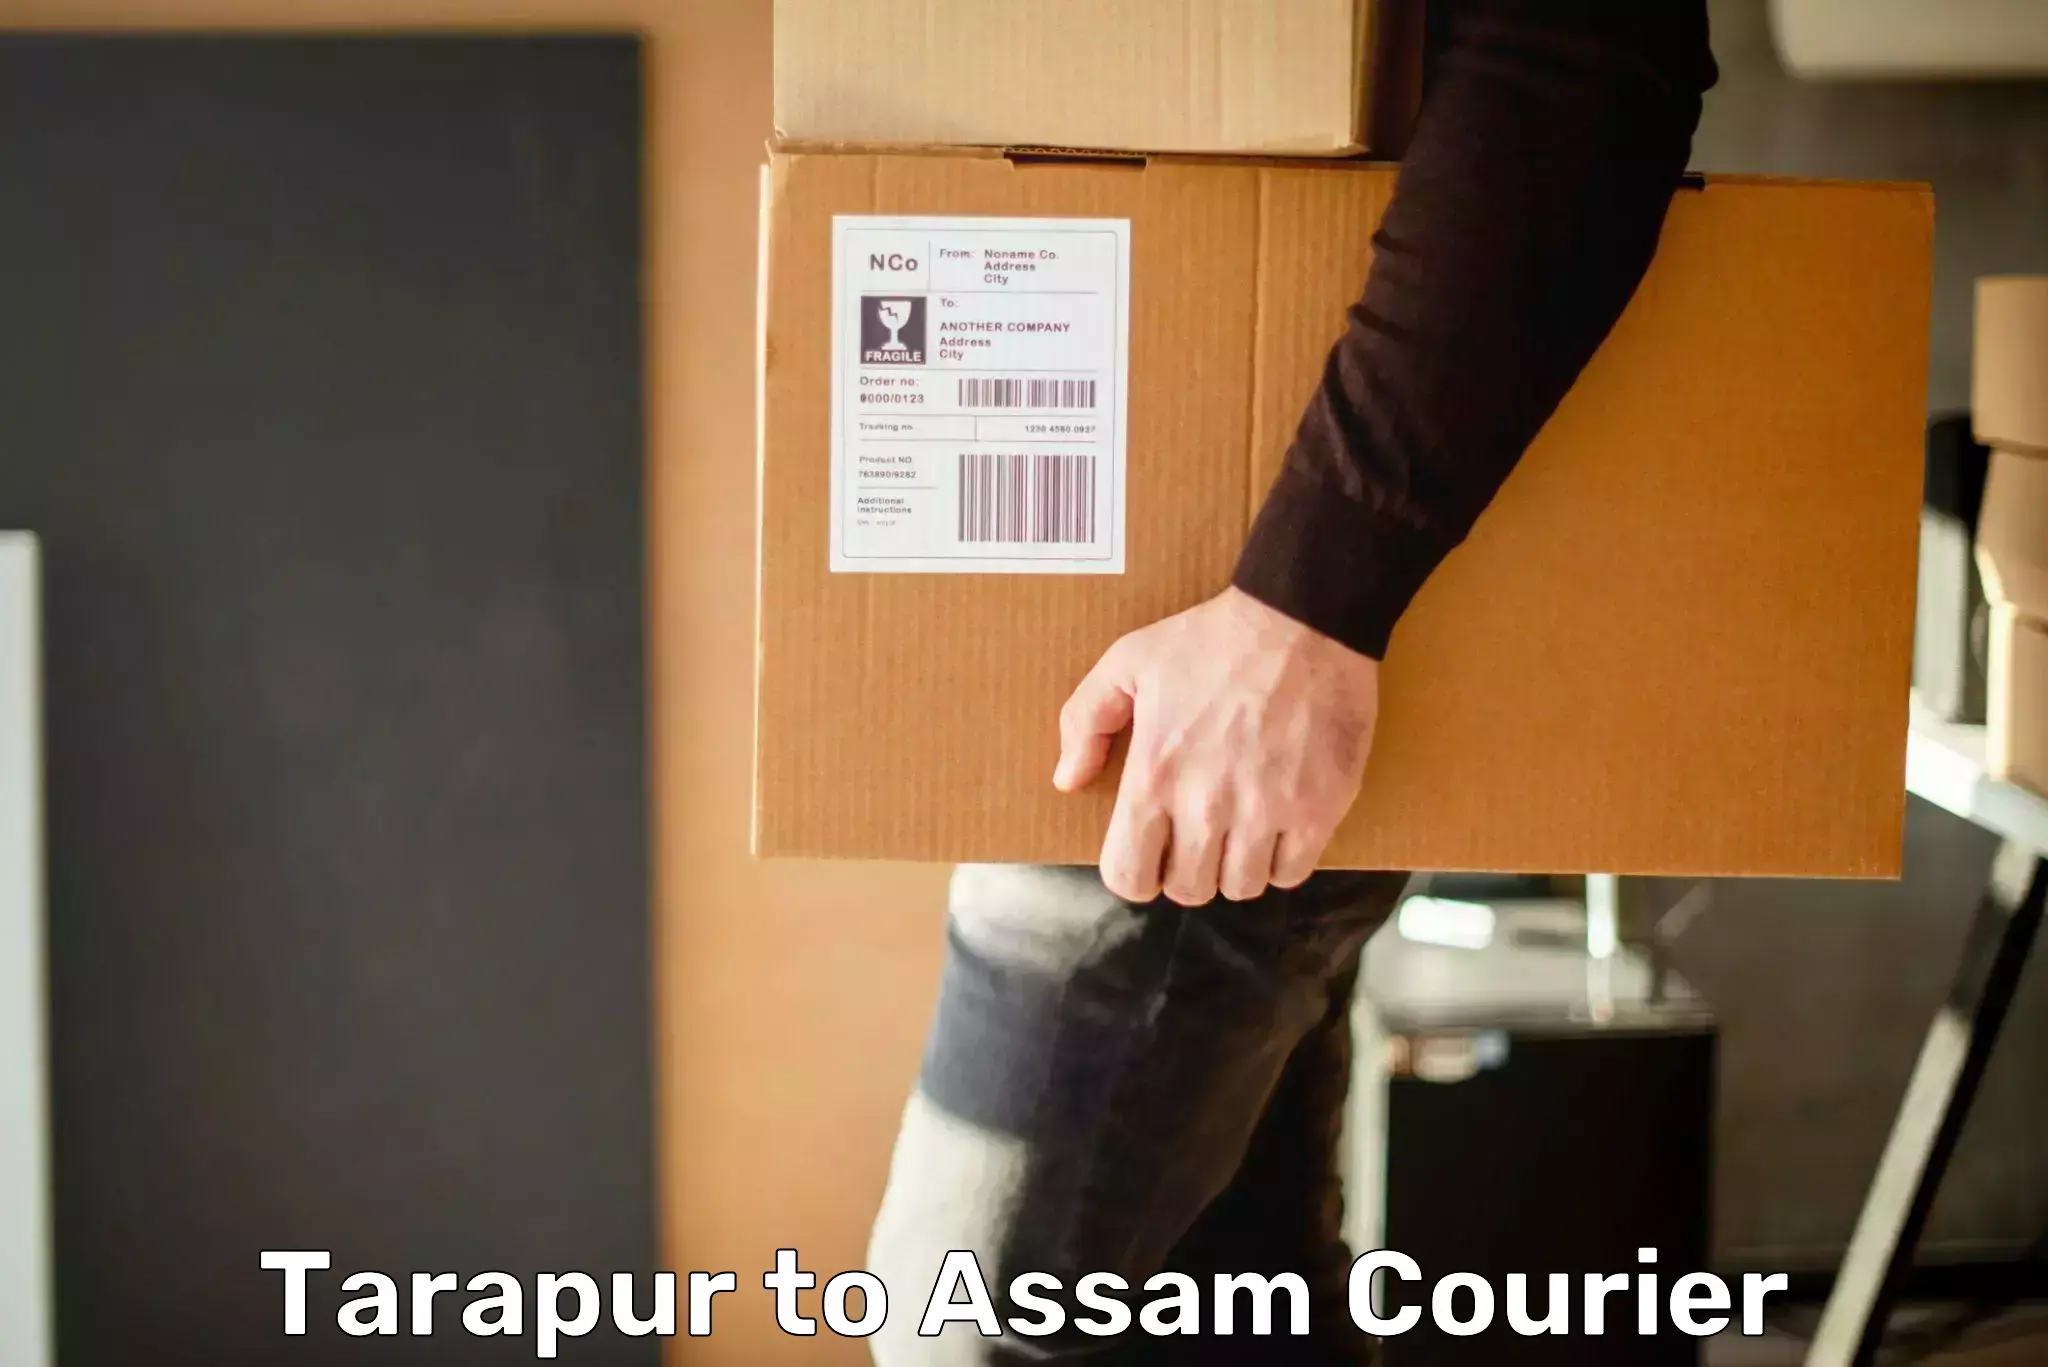 Courier service comparison Tarapur to Manikpur Bongaigaon